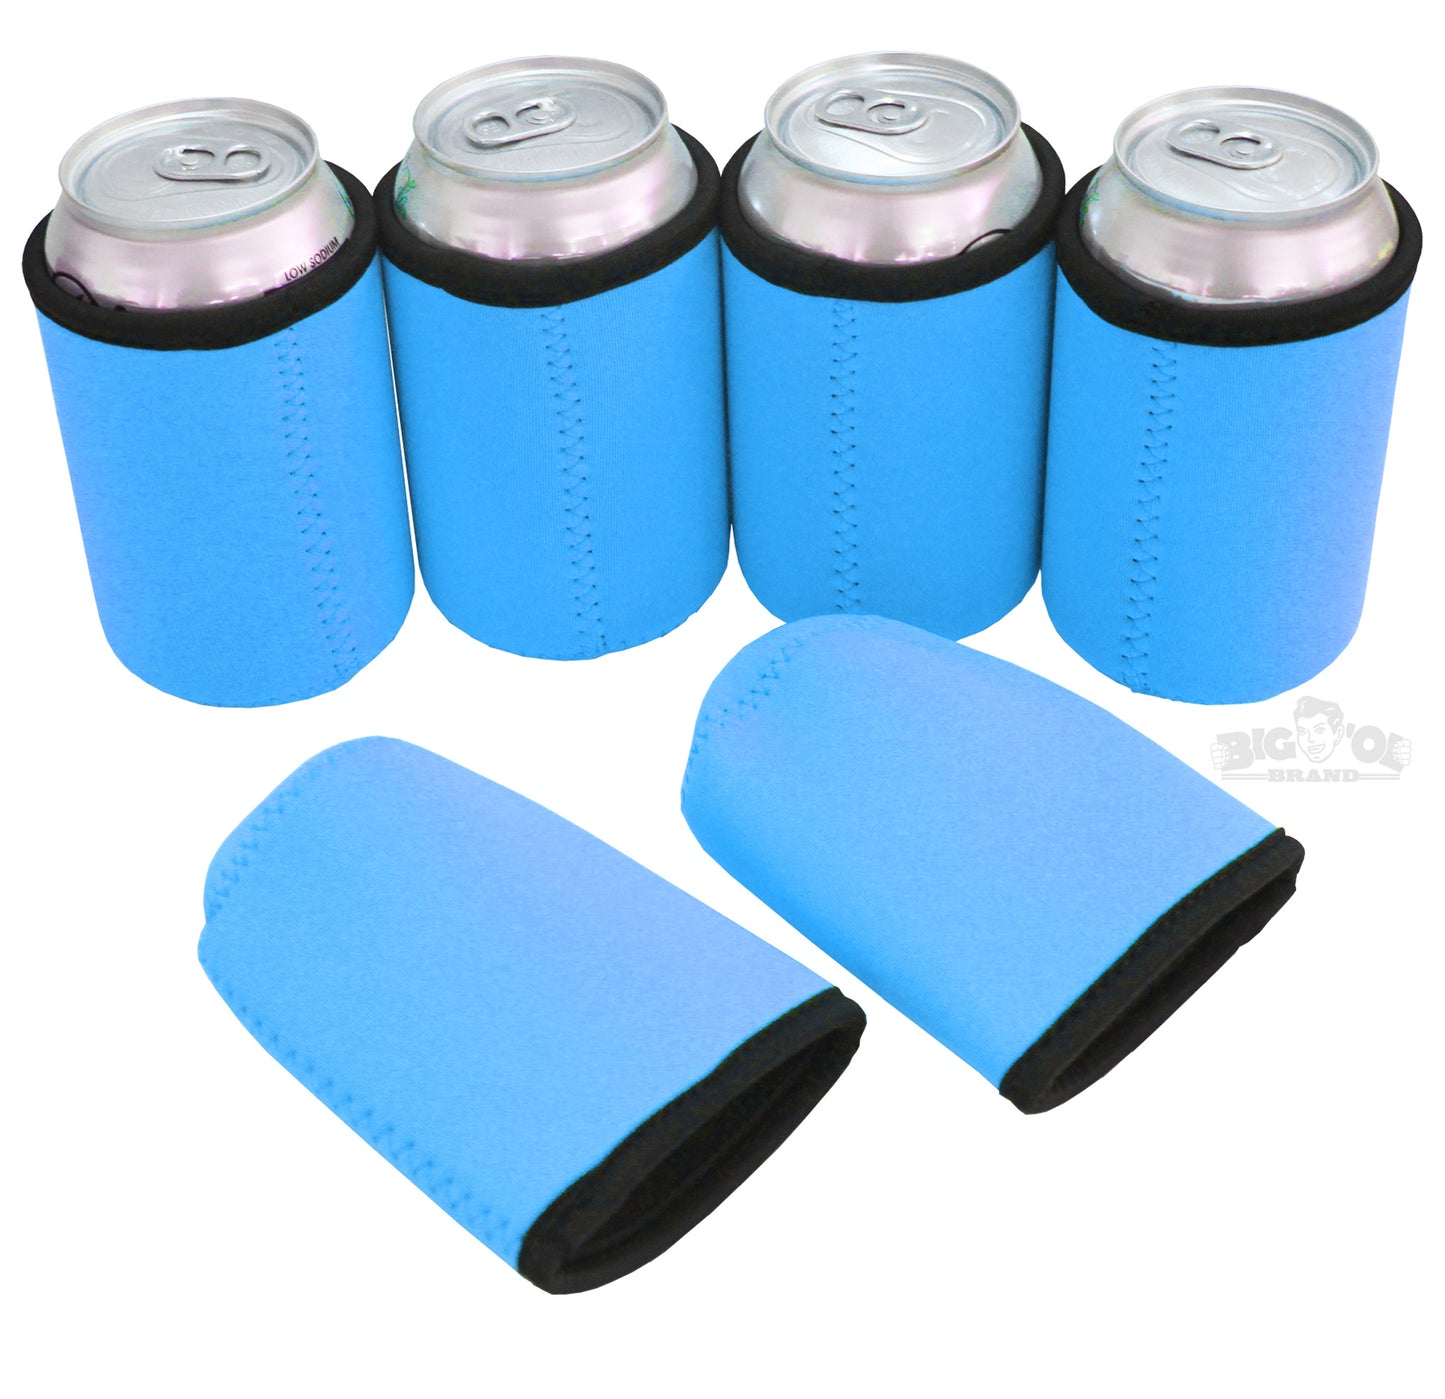 Thick Neoprene Can Cooler Beverage Insulator